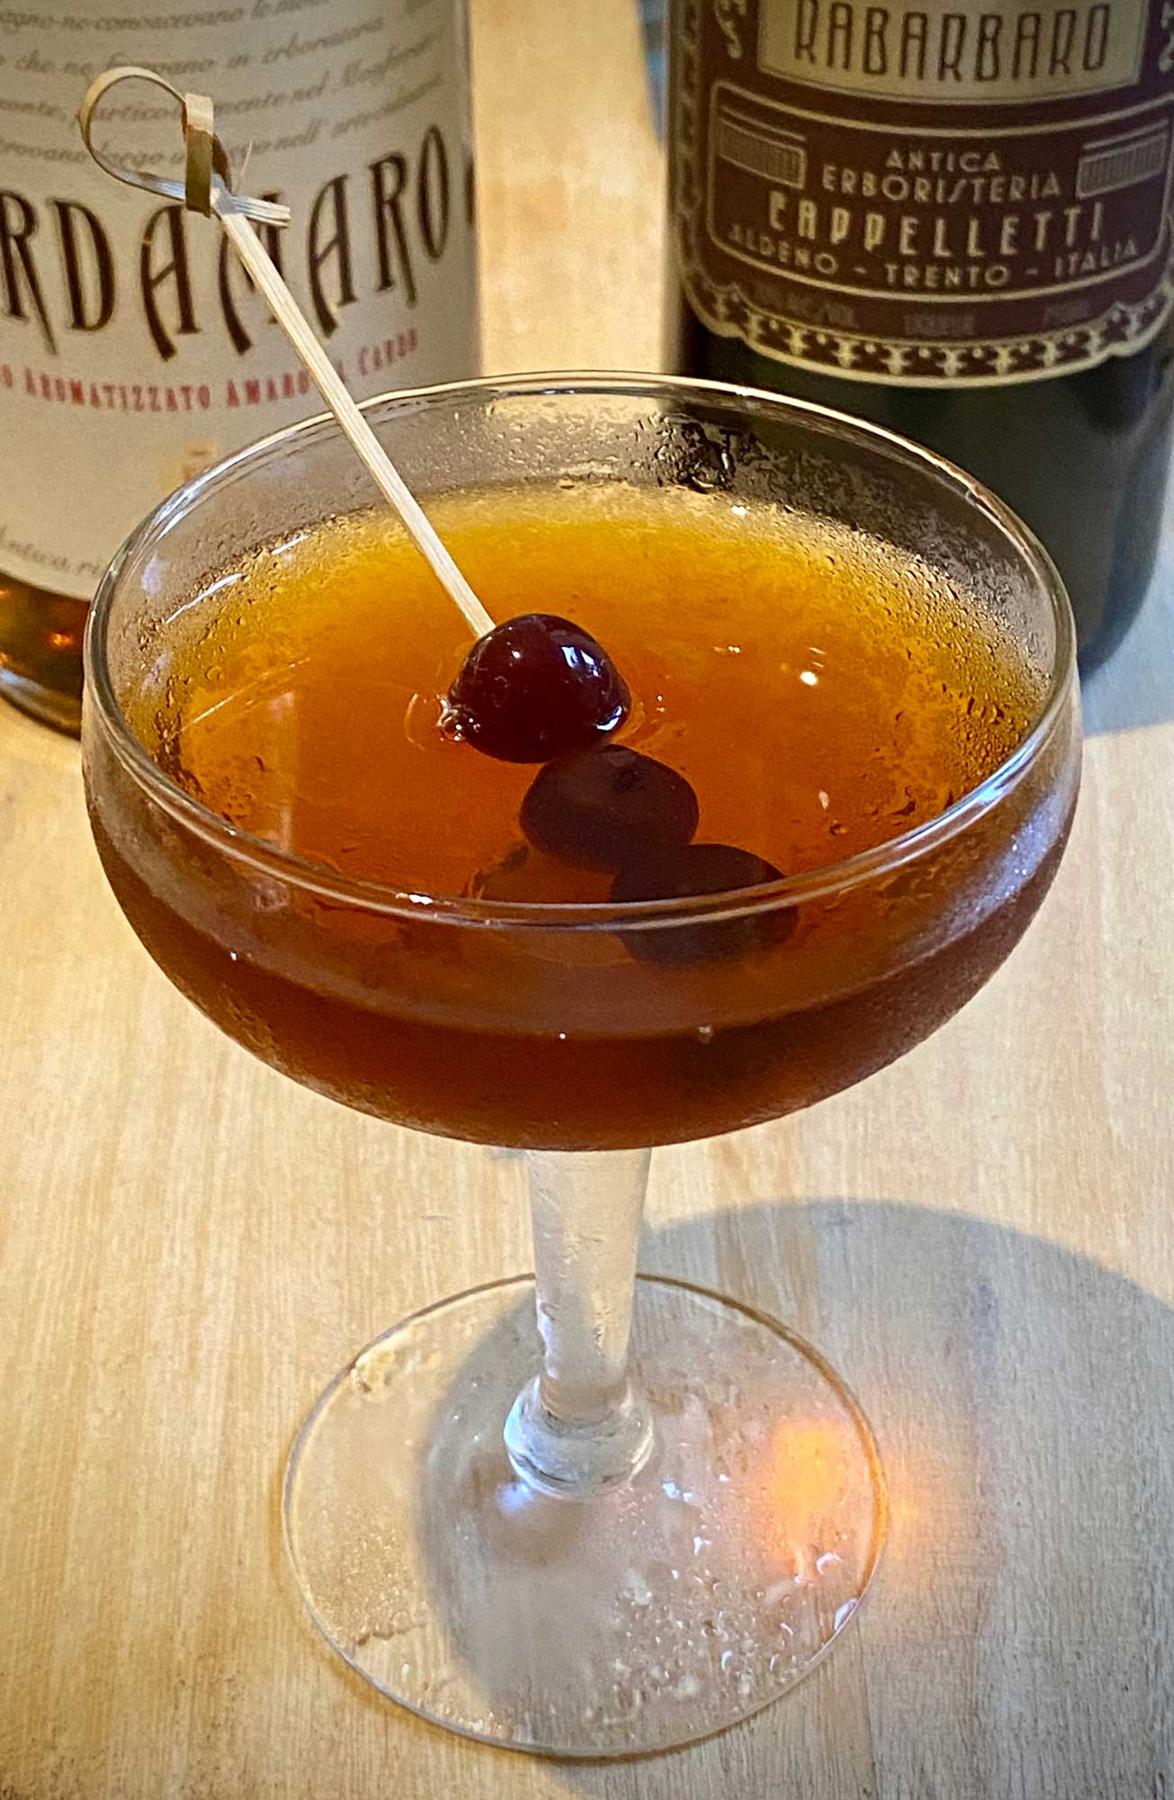 An example of the Amaro Manhattan, the mixed drink (drink) featuring bourbon whiskey, Cardamaro Vino Amaro, Amaro Sfumato Rabarbaro, and maraschino cherry; photo by Martin Doudoroff